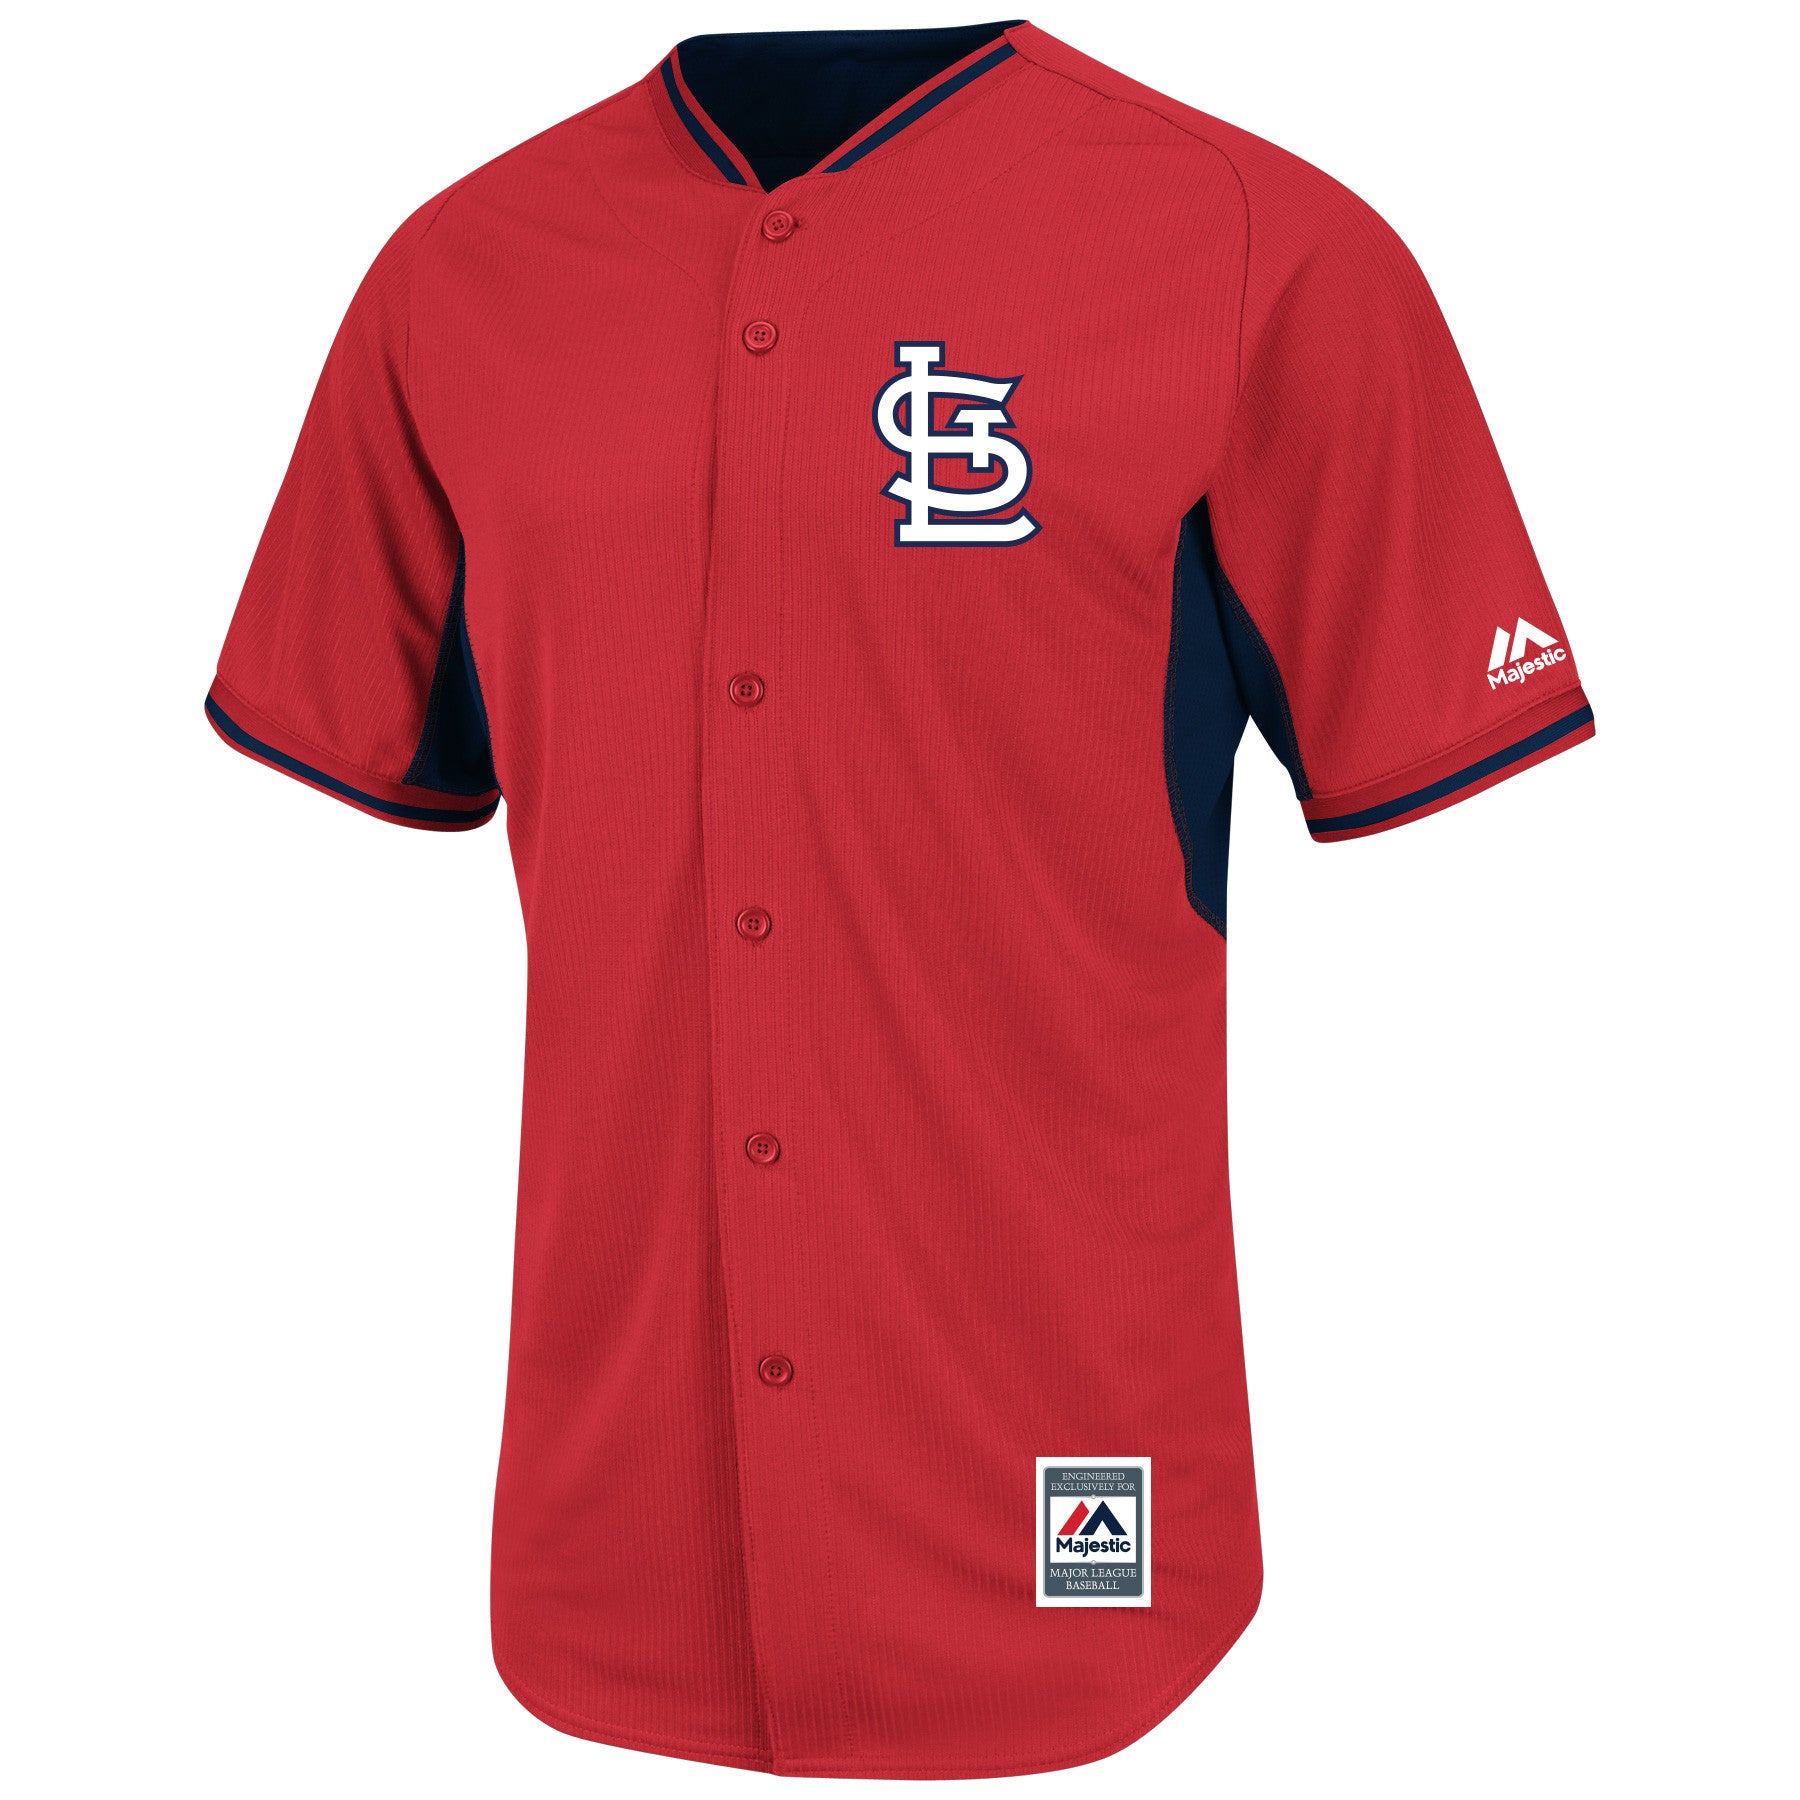 baseball cardinals jersey